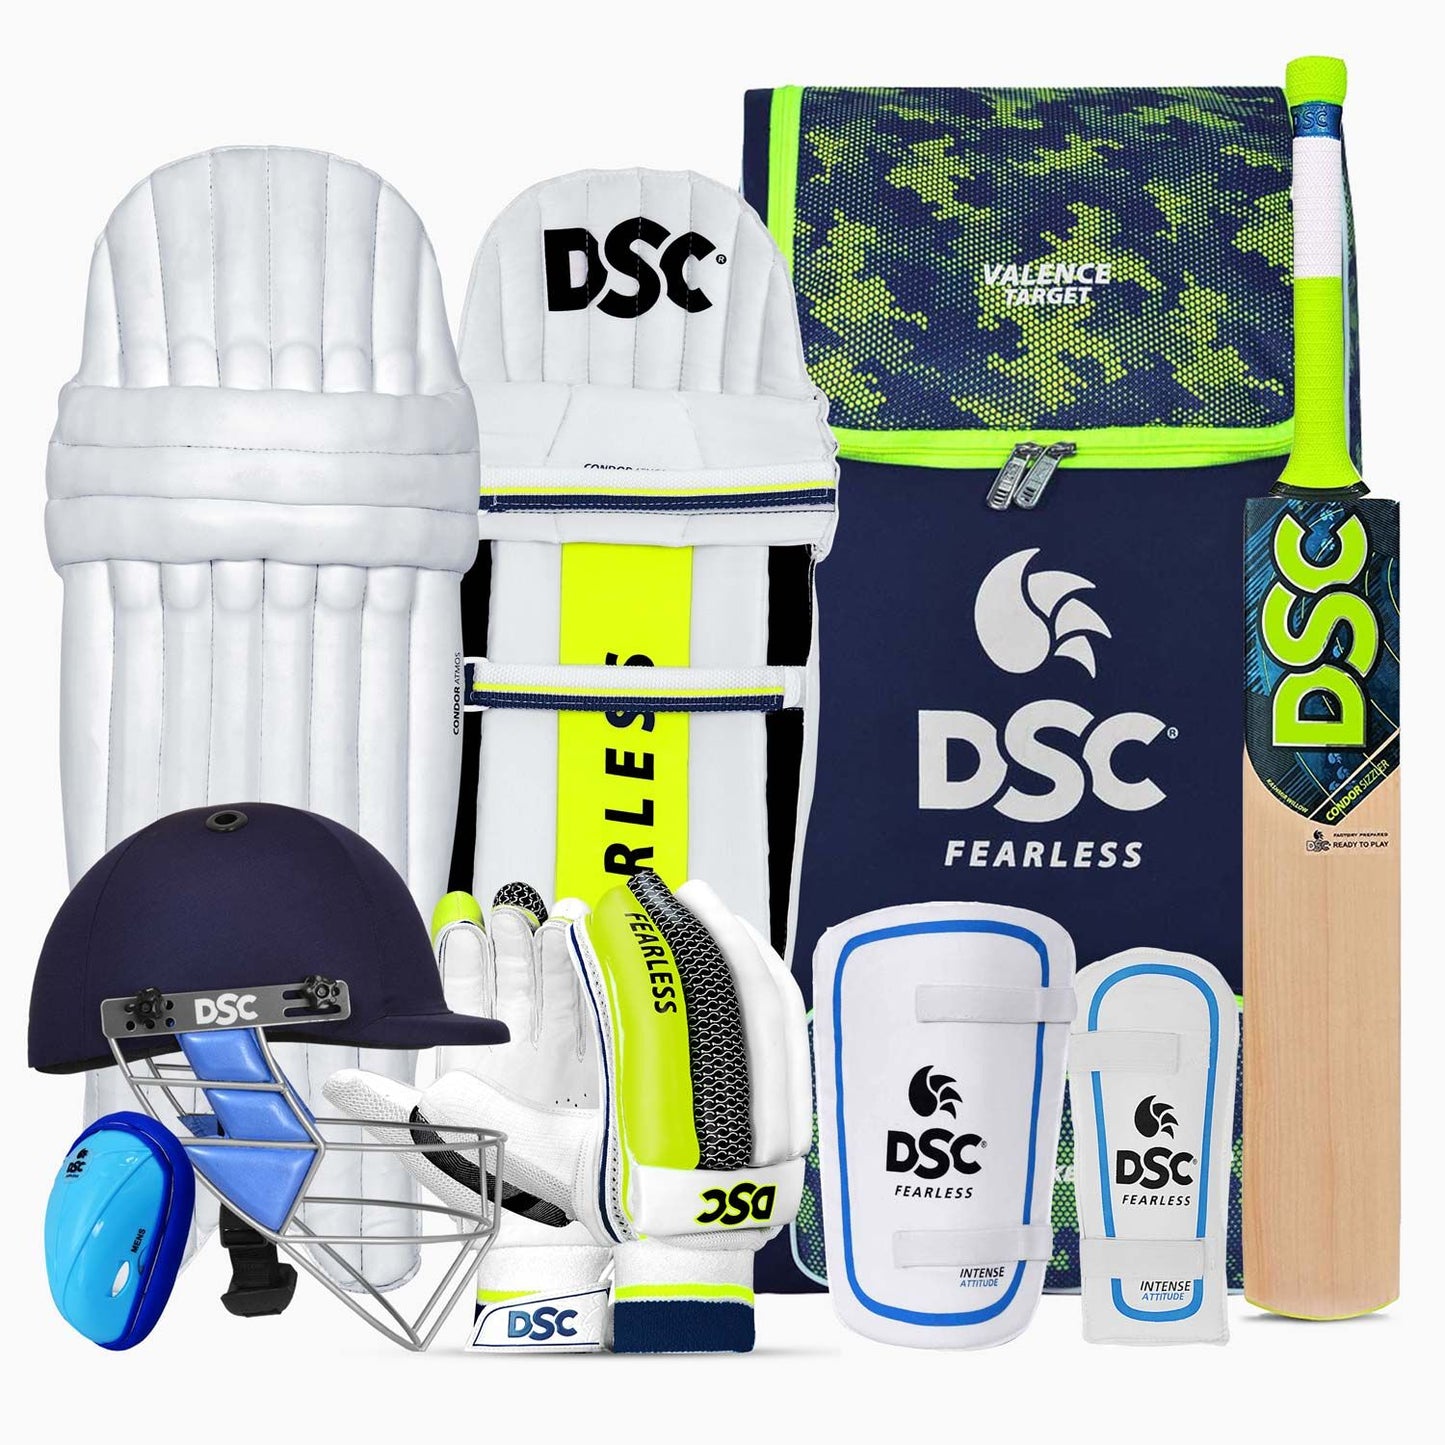 BAS Premium Kashmir Willow Cricket Kit